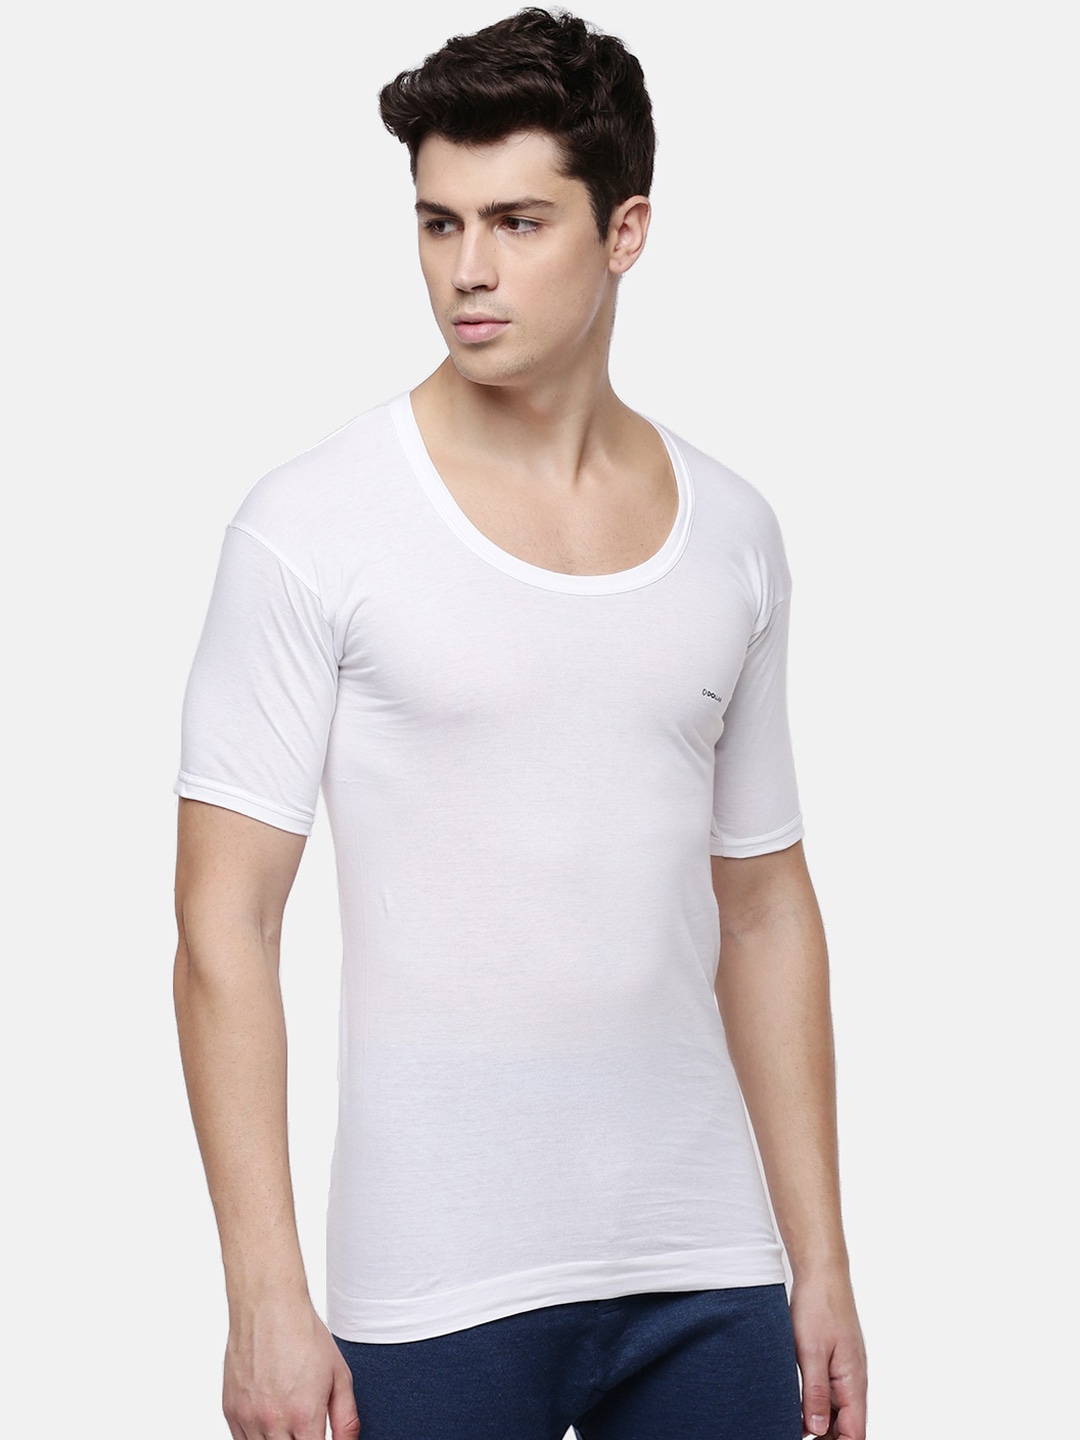 Clothing Innerwear Vests | Dollar Lehar Men Pack of 5 White Solid Innerwear Vests MLHVE-02-PO5 - OJ77921